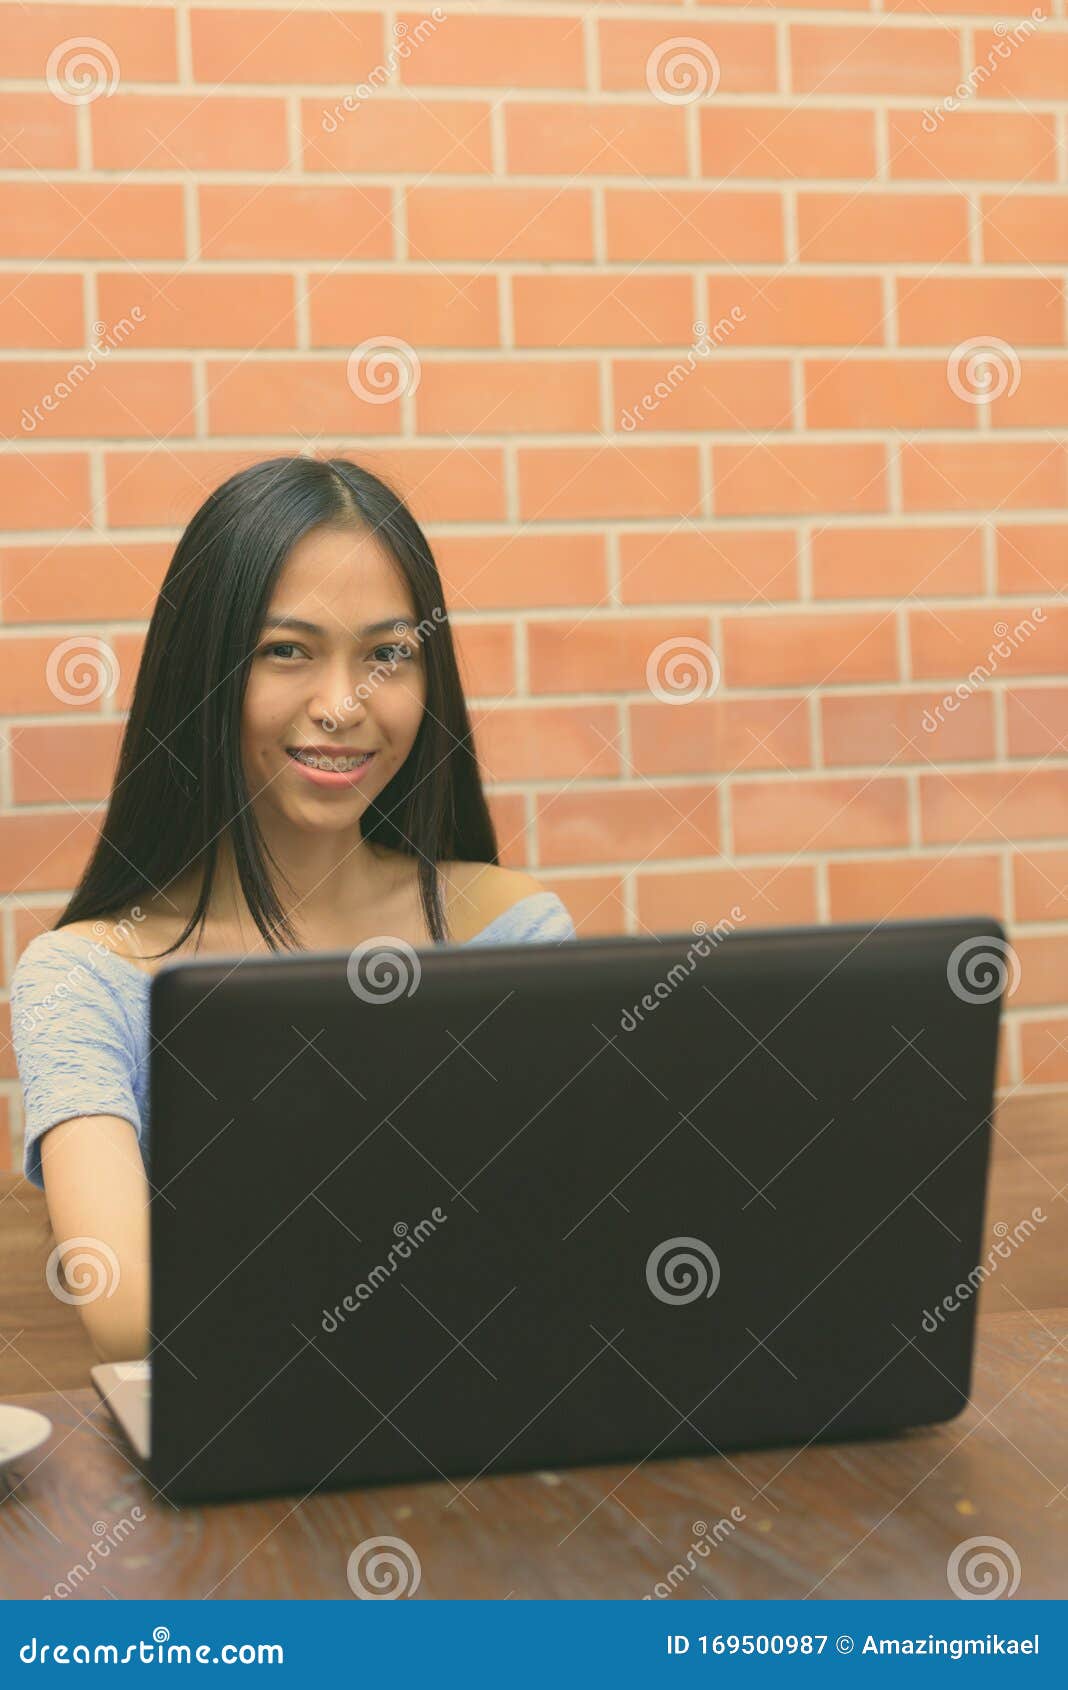 Young Beautiful Asian Teenage Girl Against Orange Wall 